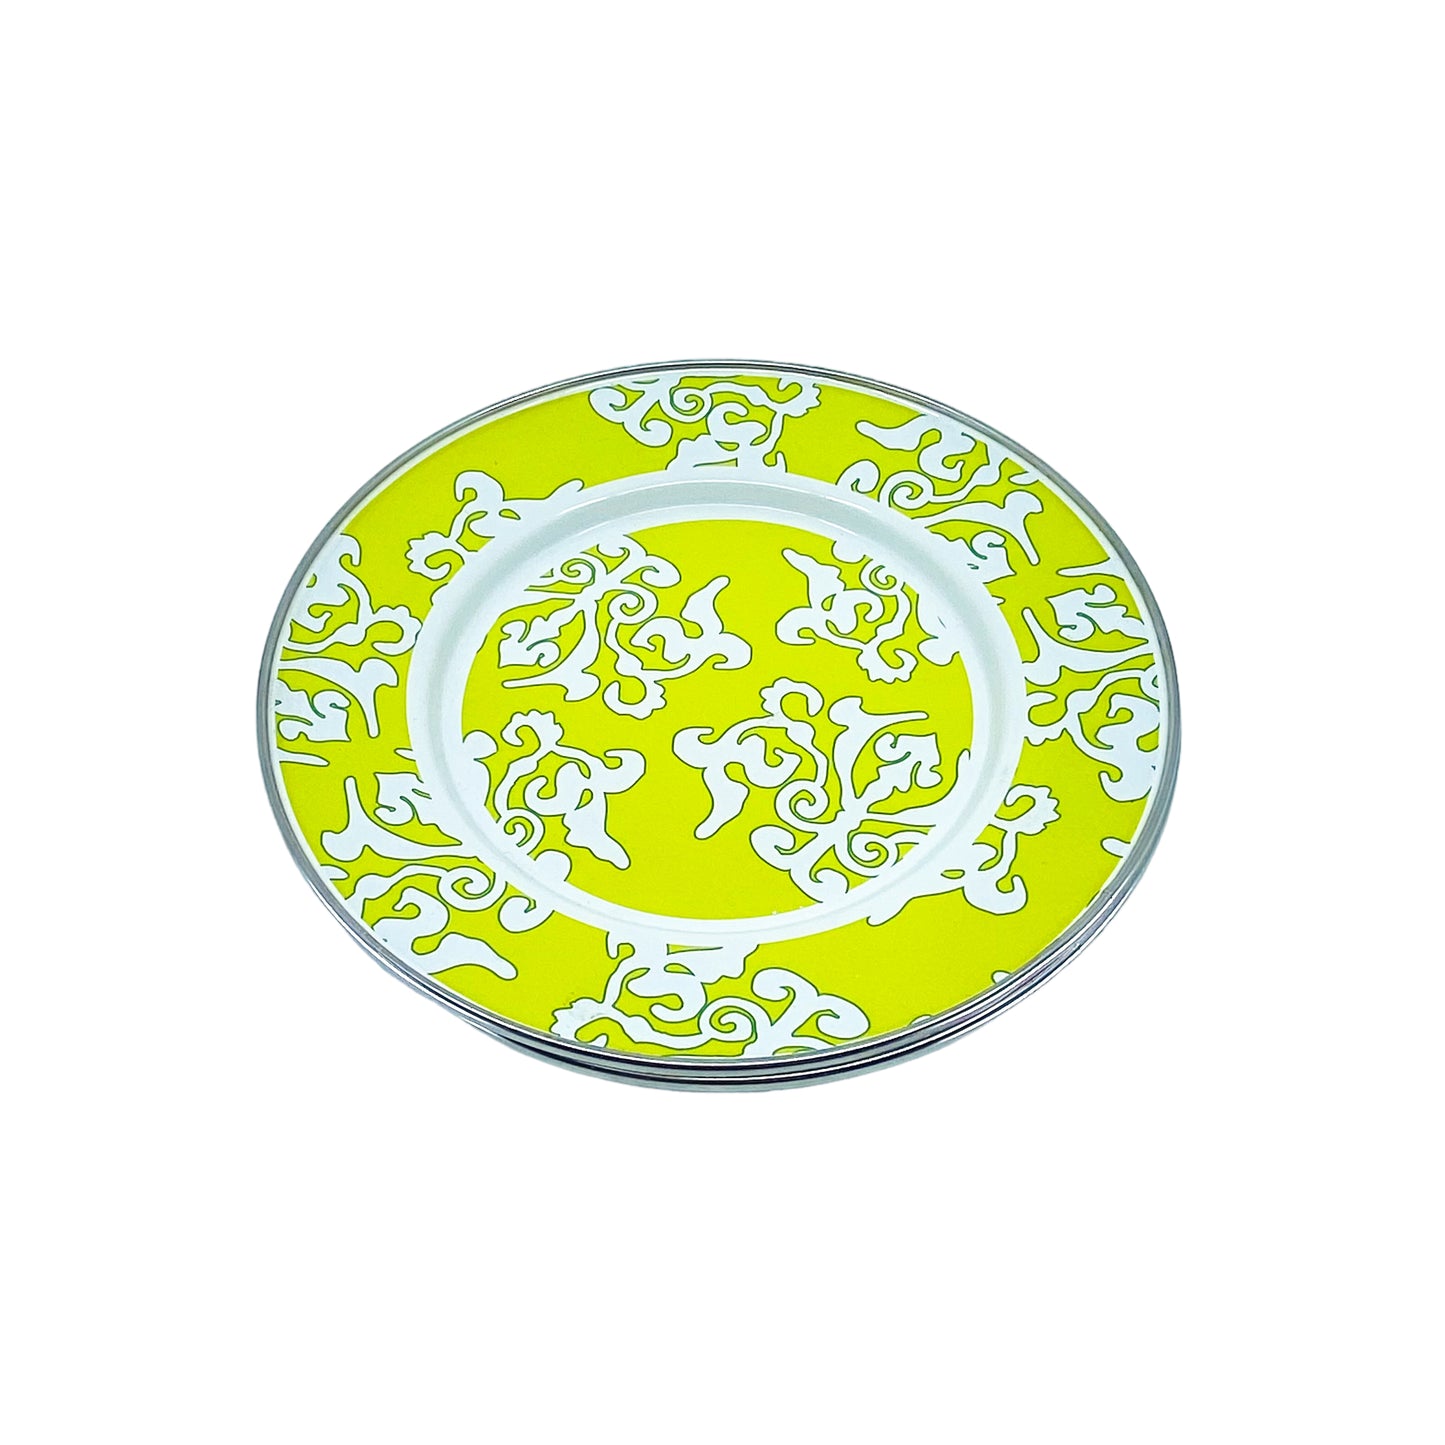 Golden Rabbit Lemon Grass Damask Enamel Metal Plates by Laura Fair, Pair